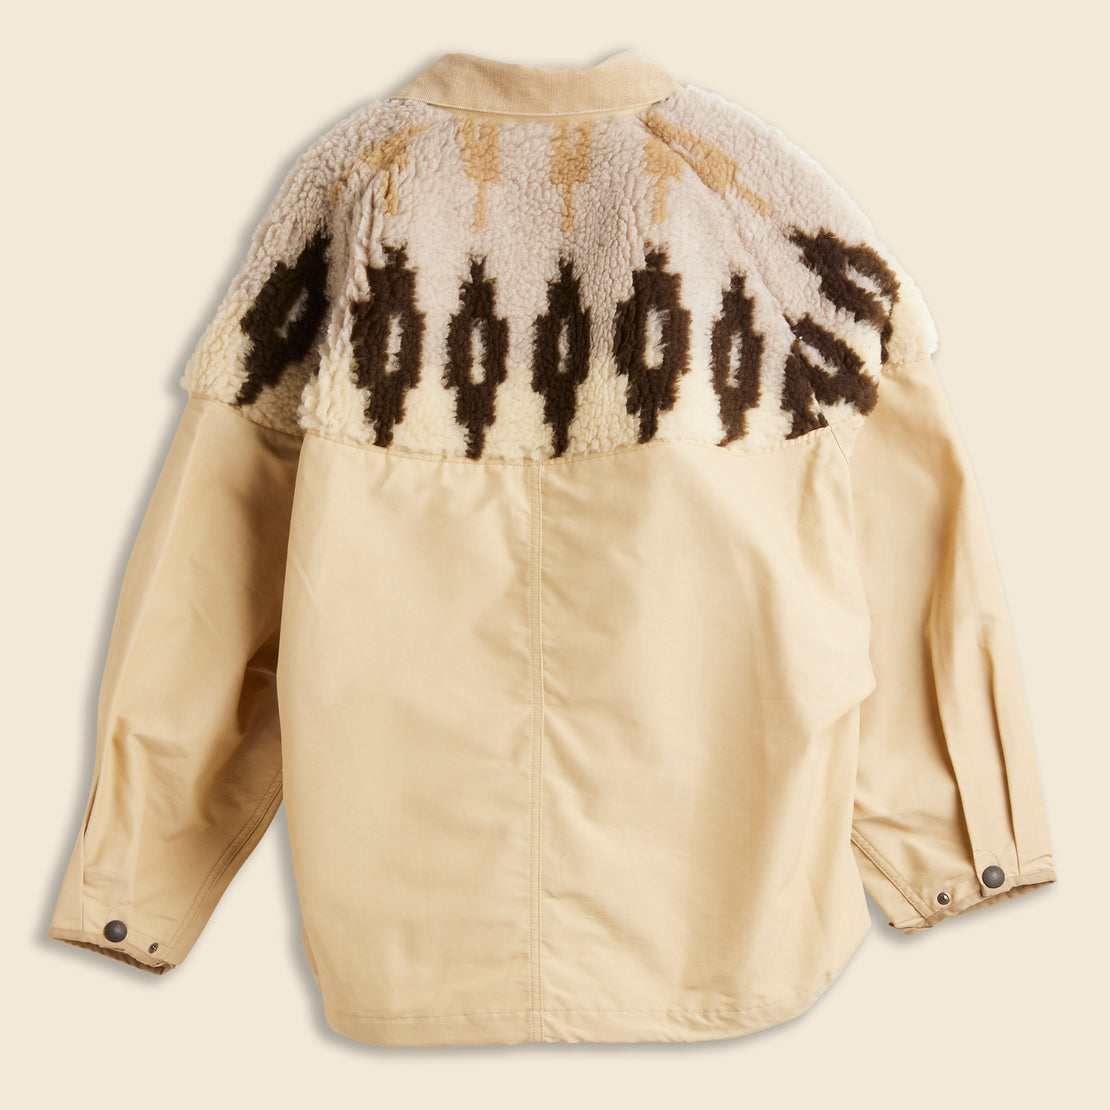 60/40Cloth x BOA Fleece NORDIC Anorak - Ecru - Kapital - STAG Provisions - W - Outerwear - Coat/Jacket